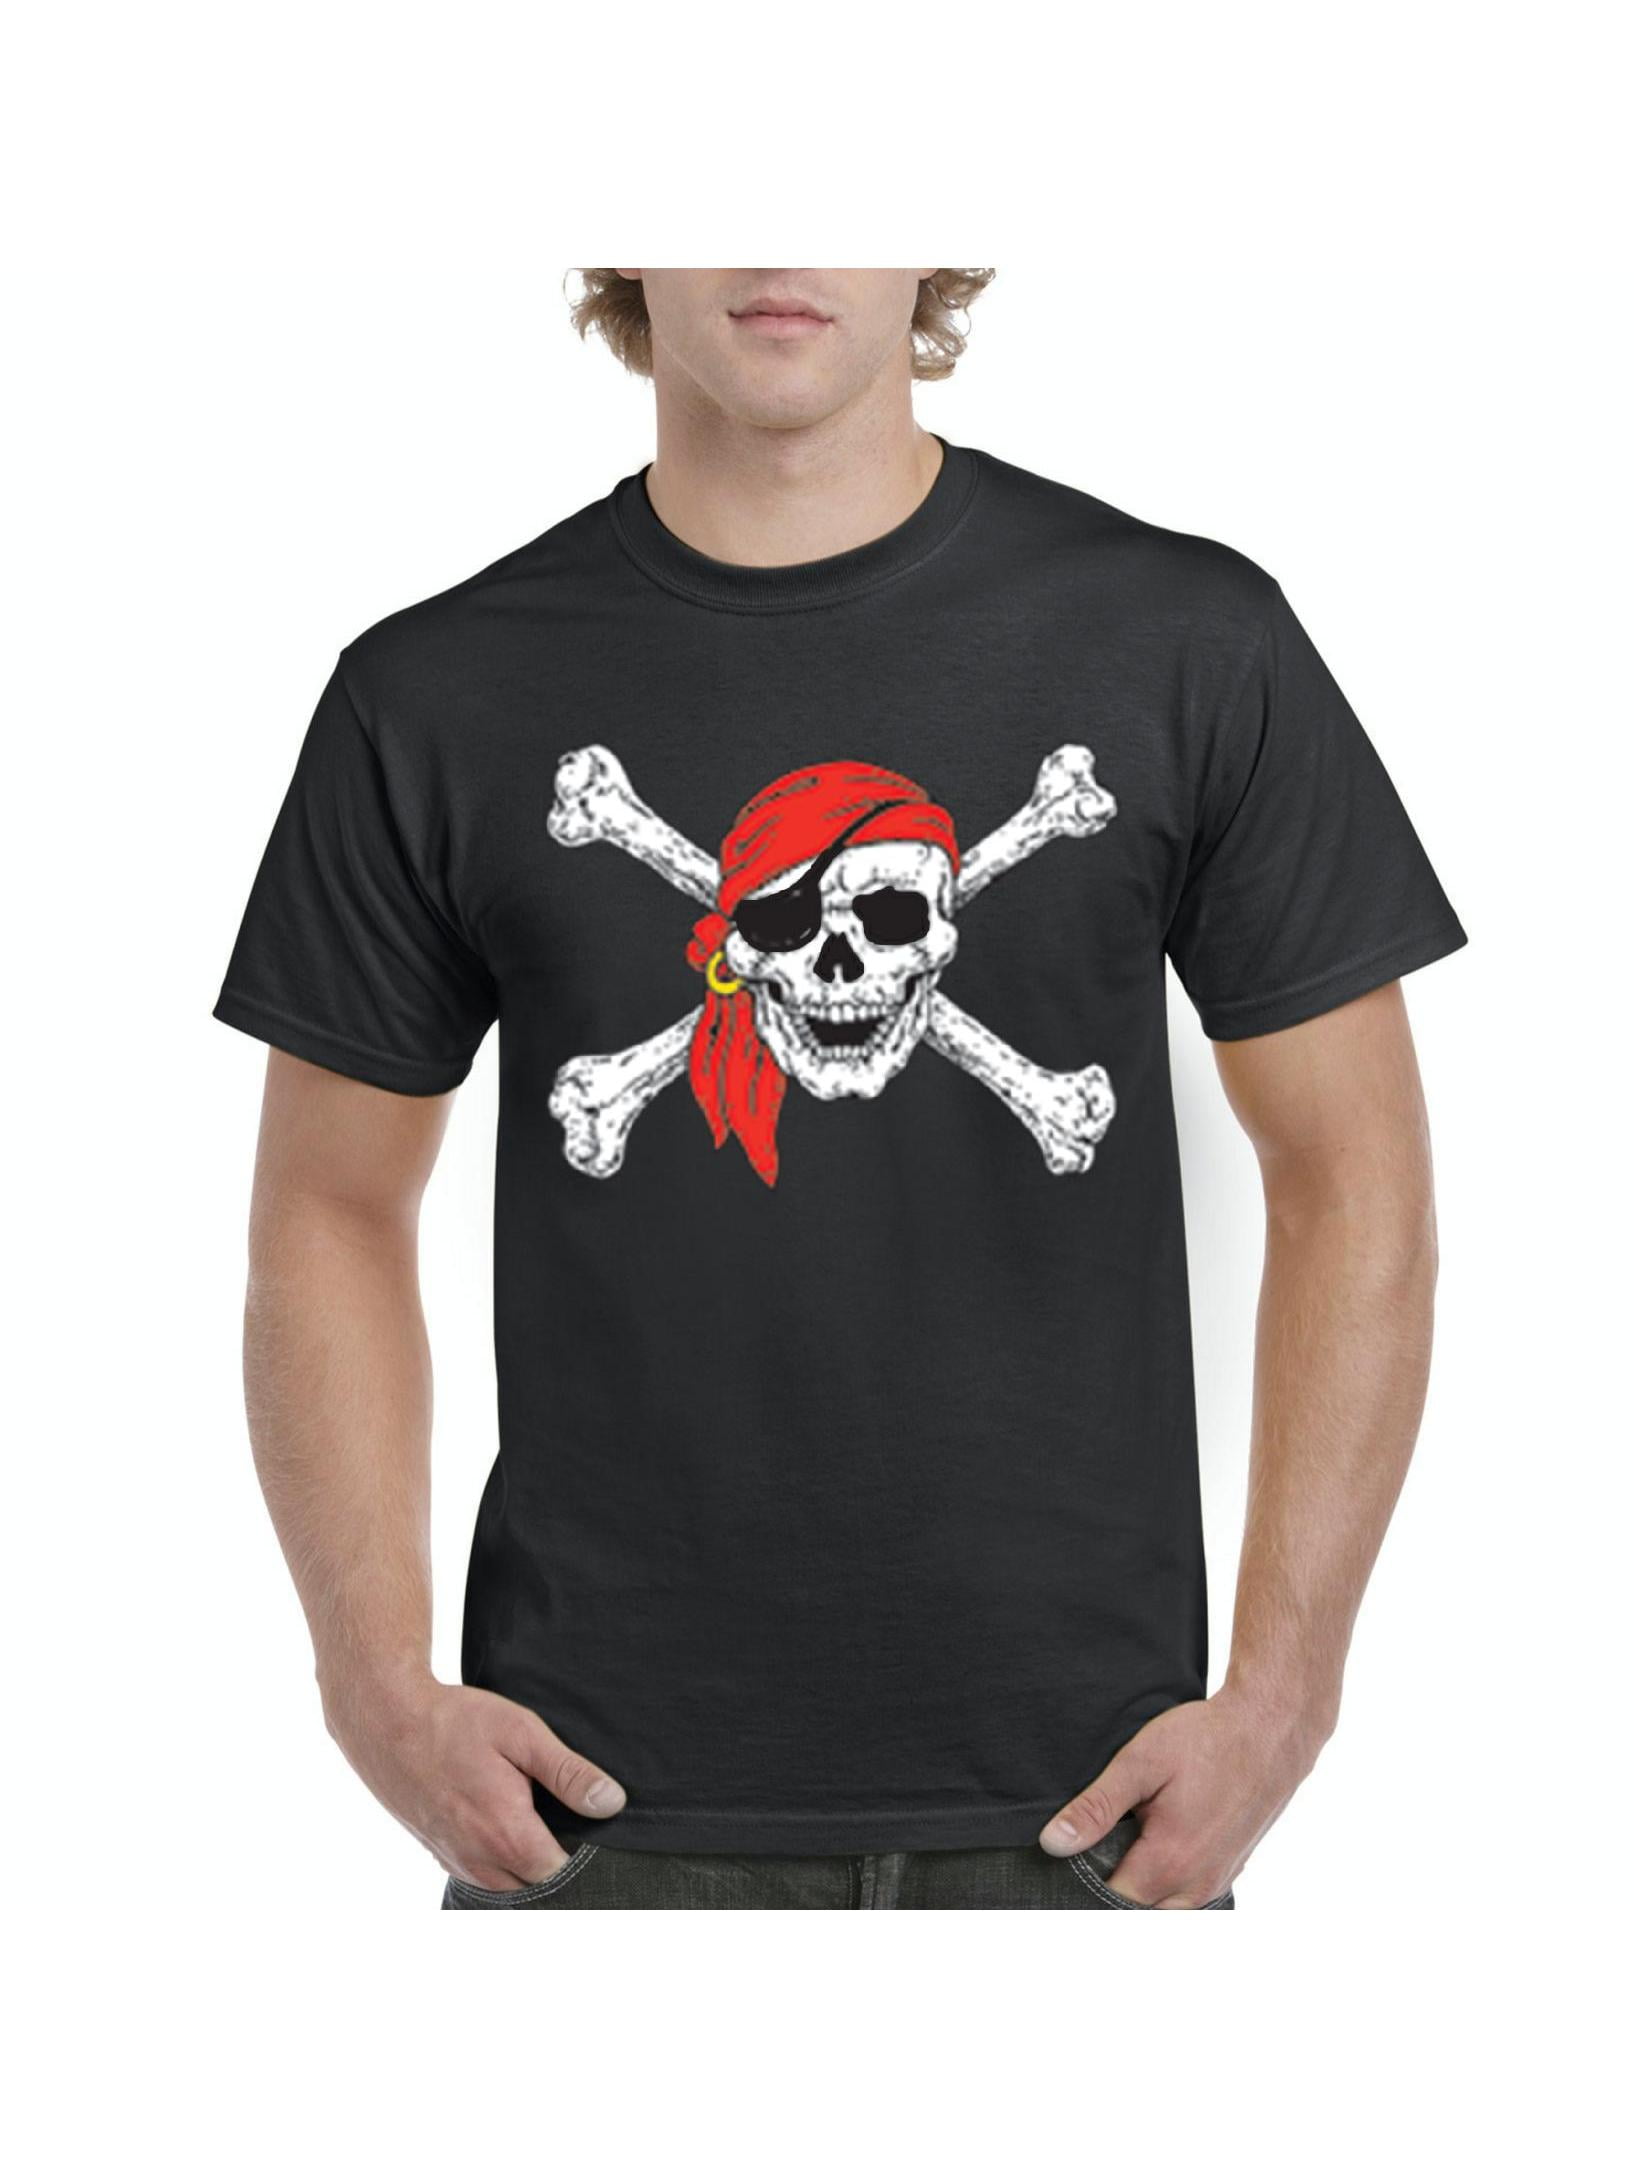 Cat Pirate T shirt Jolly Roger Flag Skull and Crossbones Tee Vintage Men Gift...